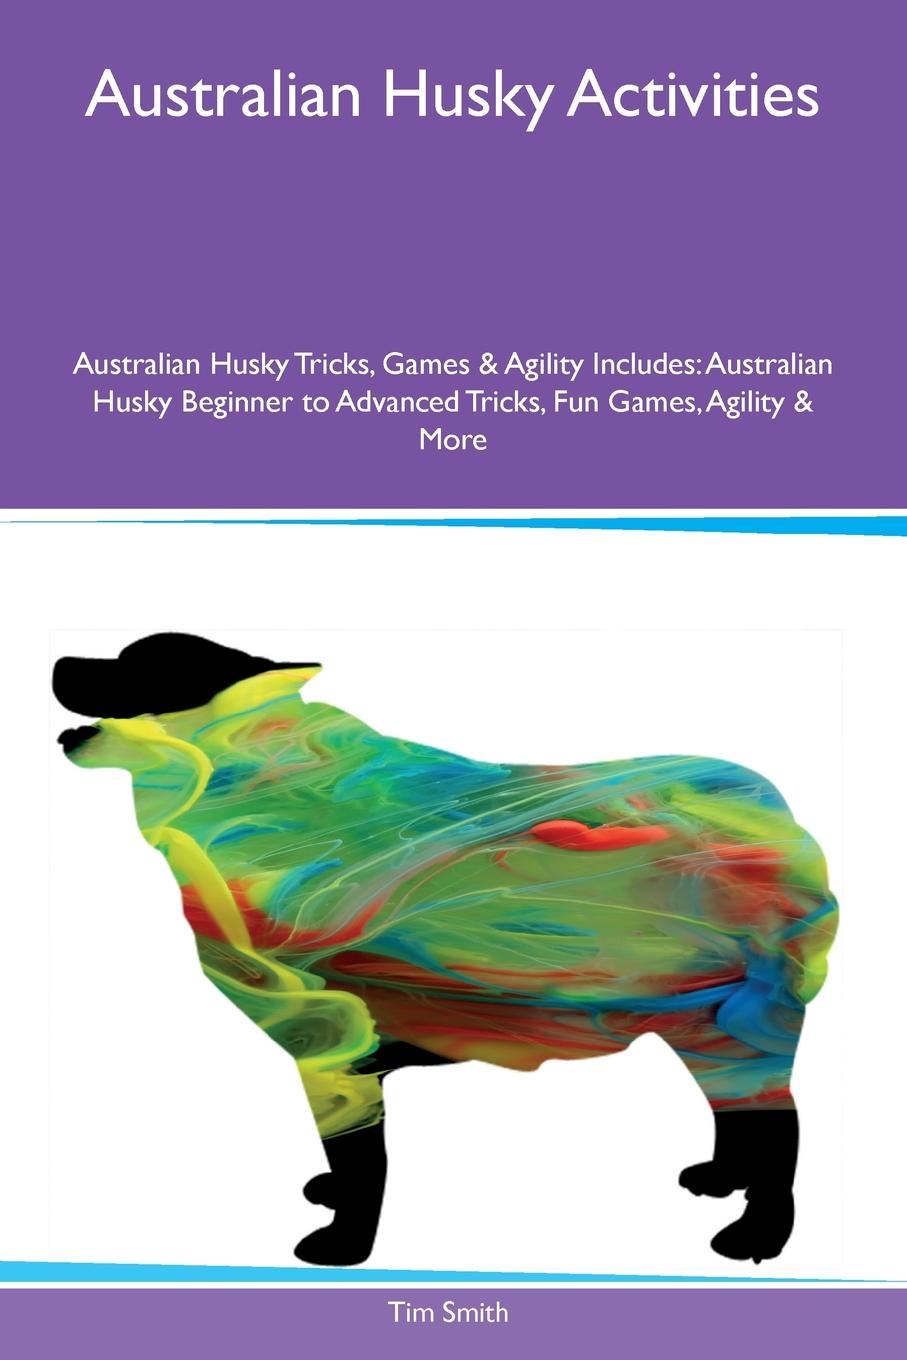 Australian Husky Activities Australian Husky Tricks, Games & Agility Includes. Australian Husky Beginner to Advanced Tricks, Fun Games, Agility & More